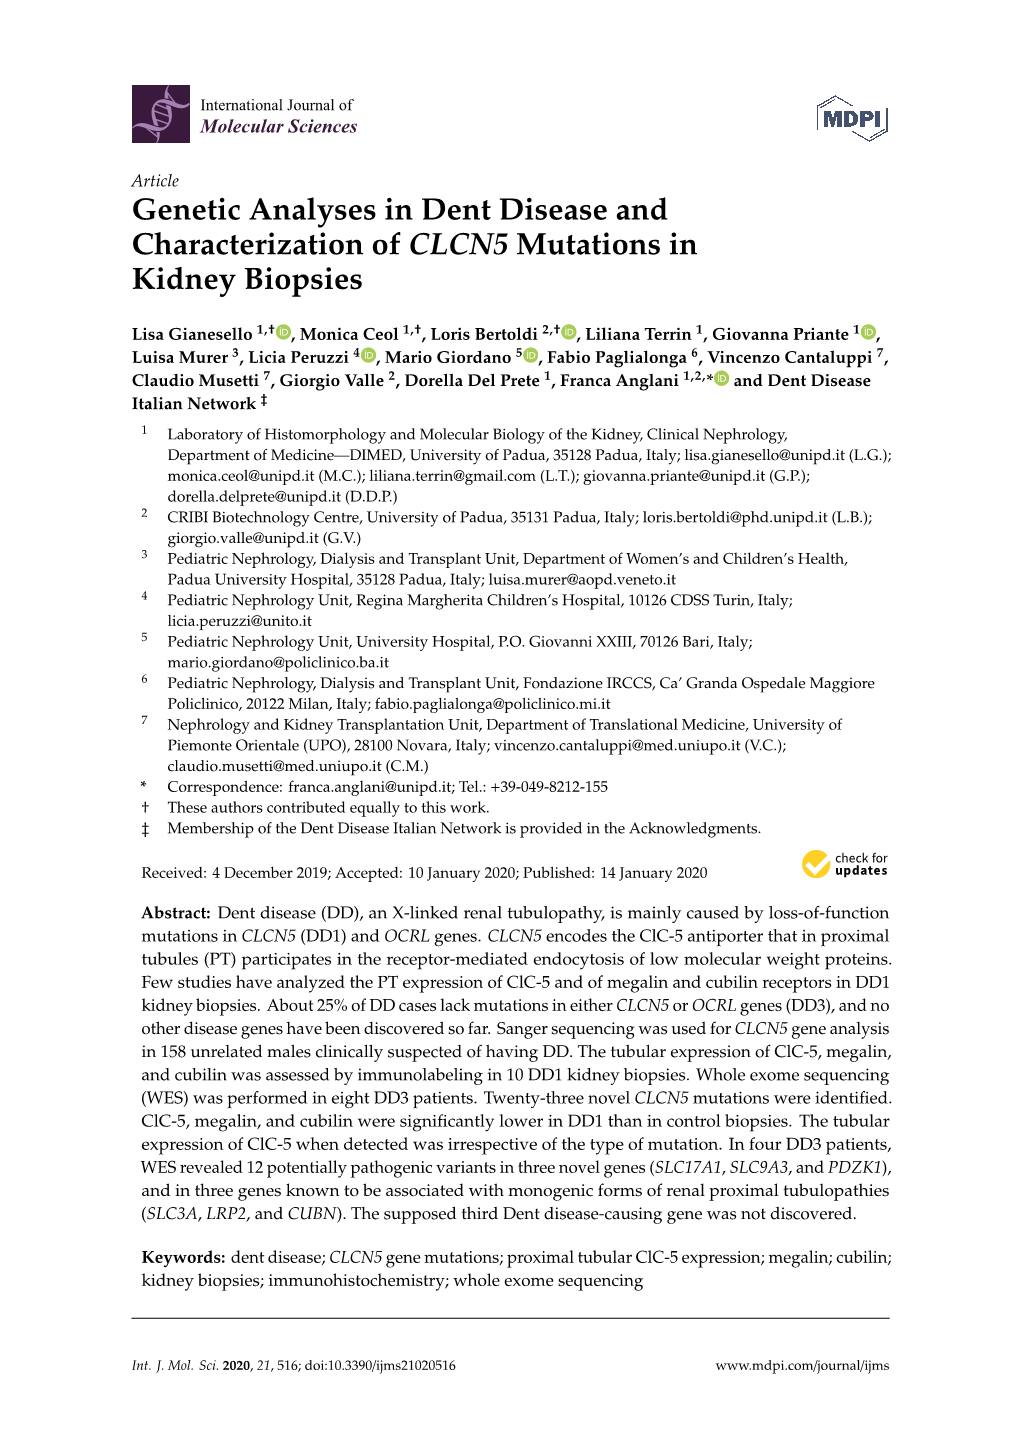 Genetic Analyses in Dent Disease and Characterization of CLCN5 Mutations in Kidney Biopsies